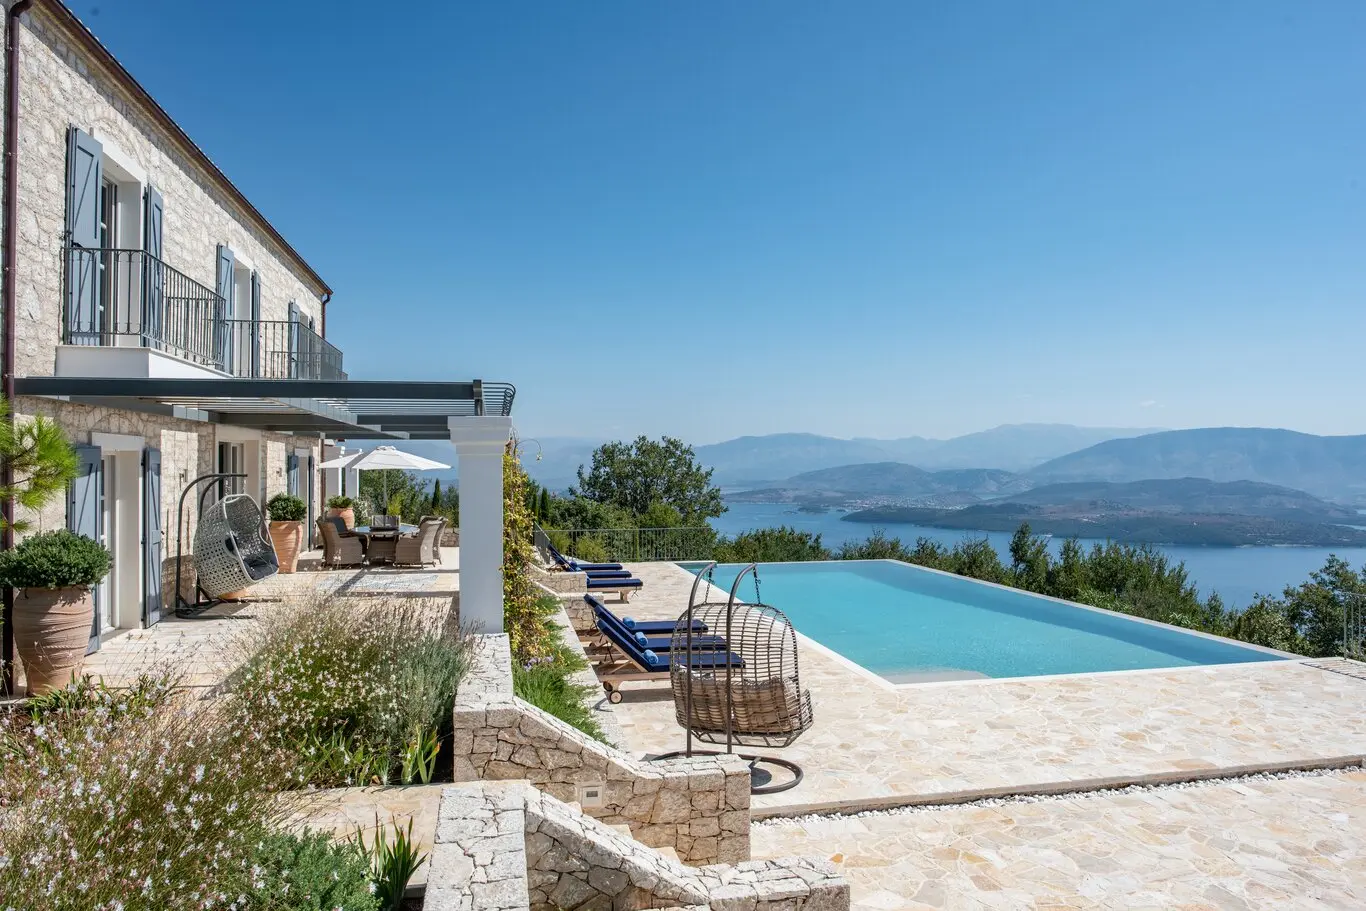 Luxury villa holidays - just the way you like it